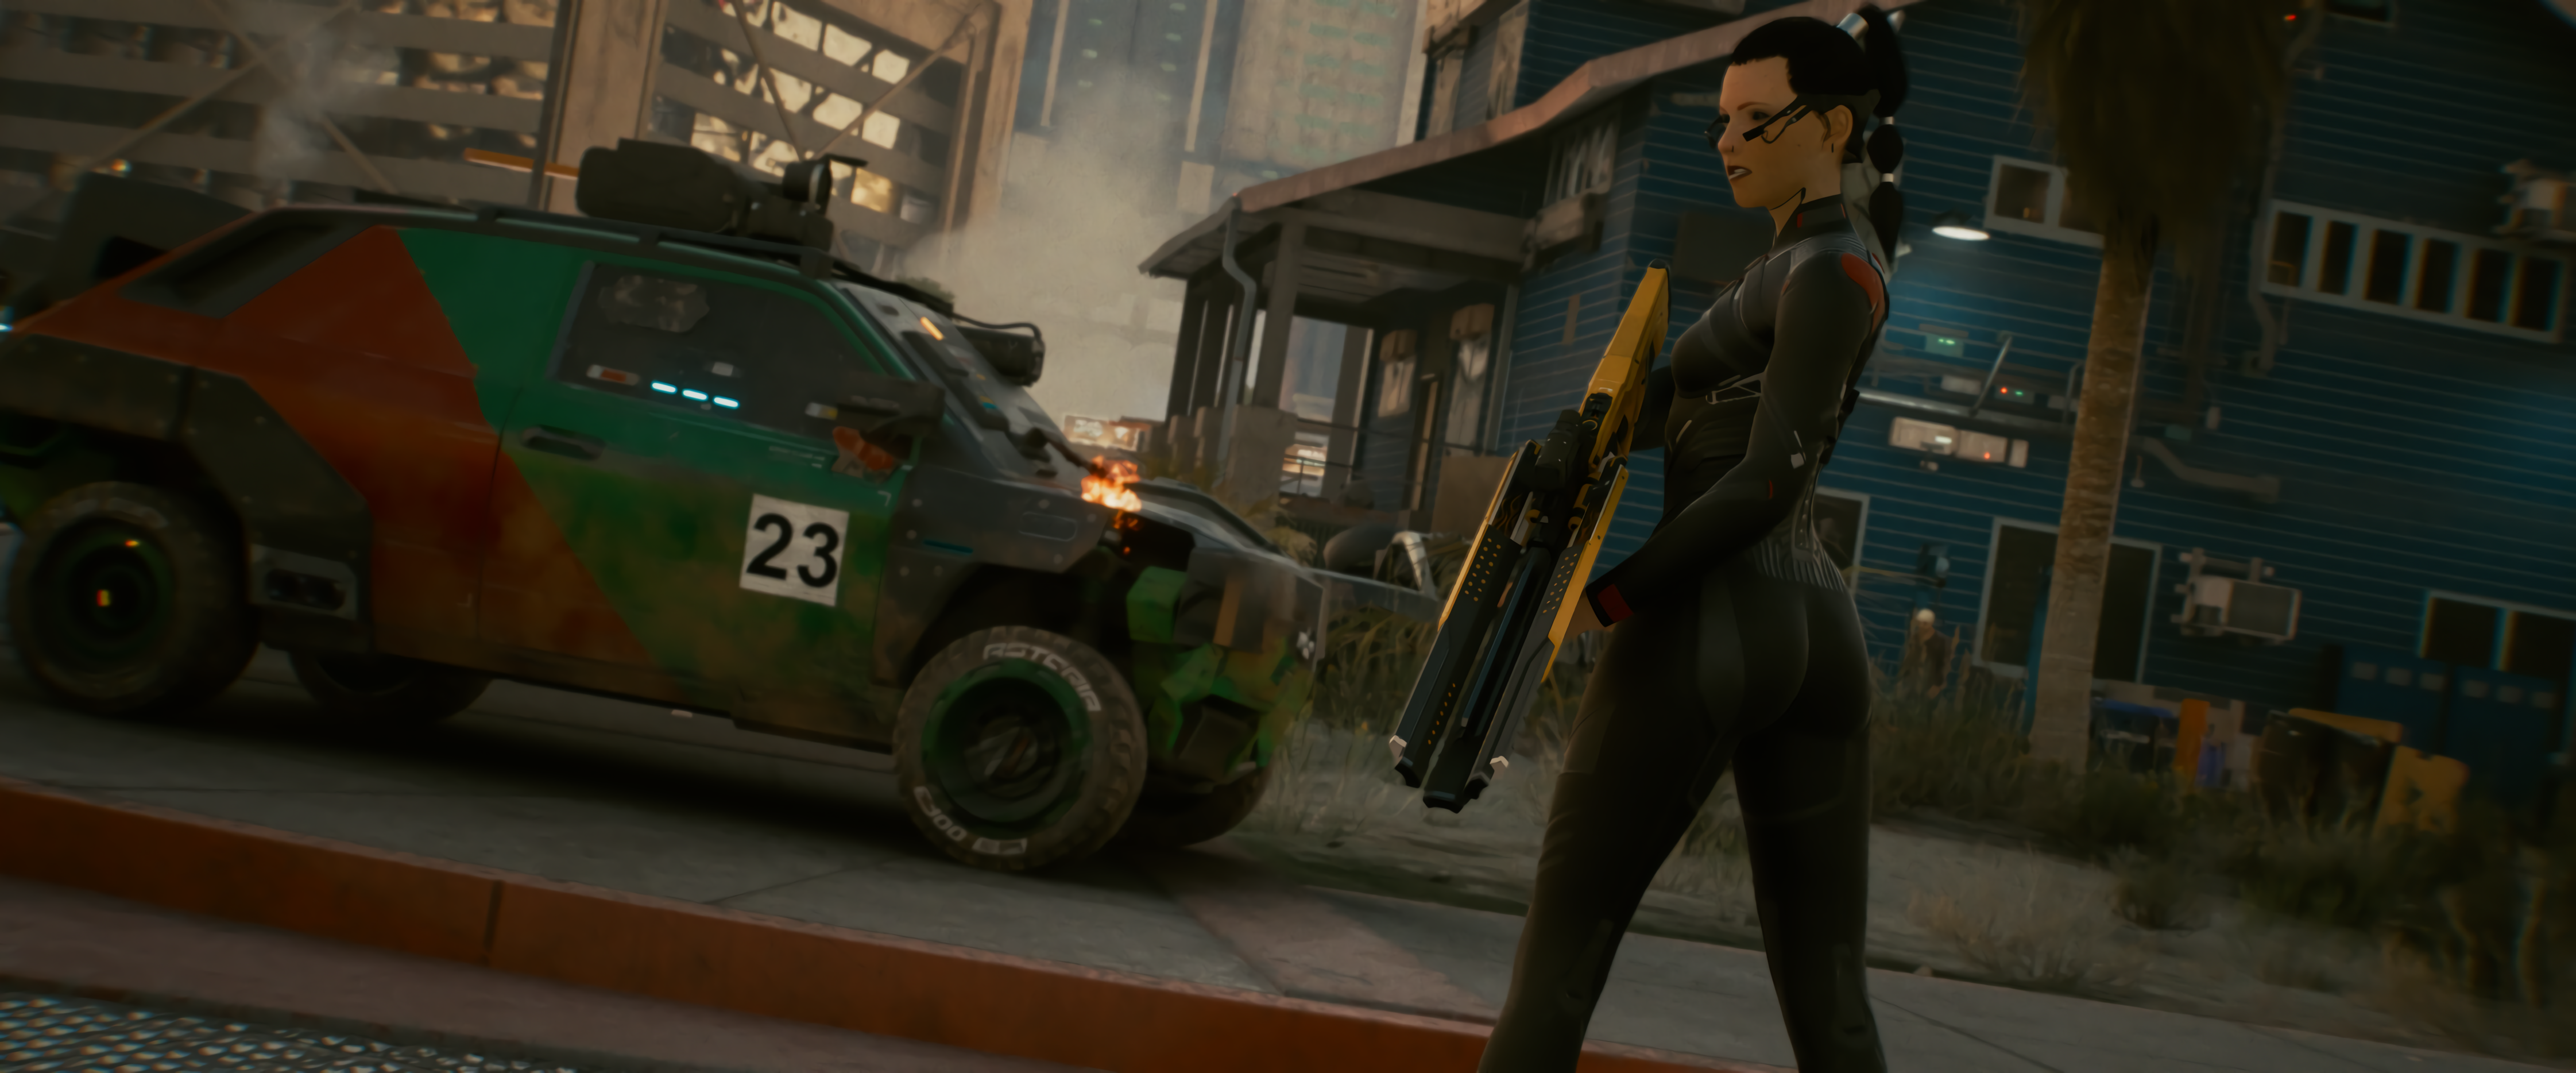 Cyberpunk 2077 Cyberpunk Weapon Car Vehicle Screen Shot Girls With Guns Video Games PC Gaming Video  4486x1868